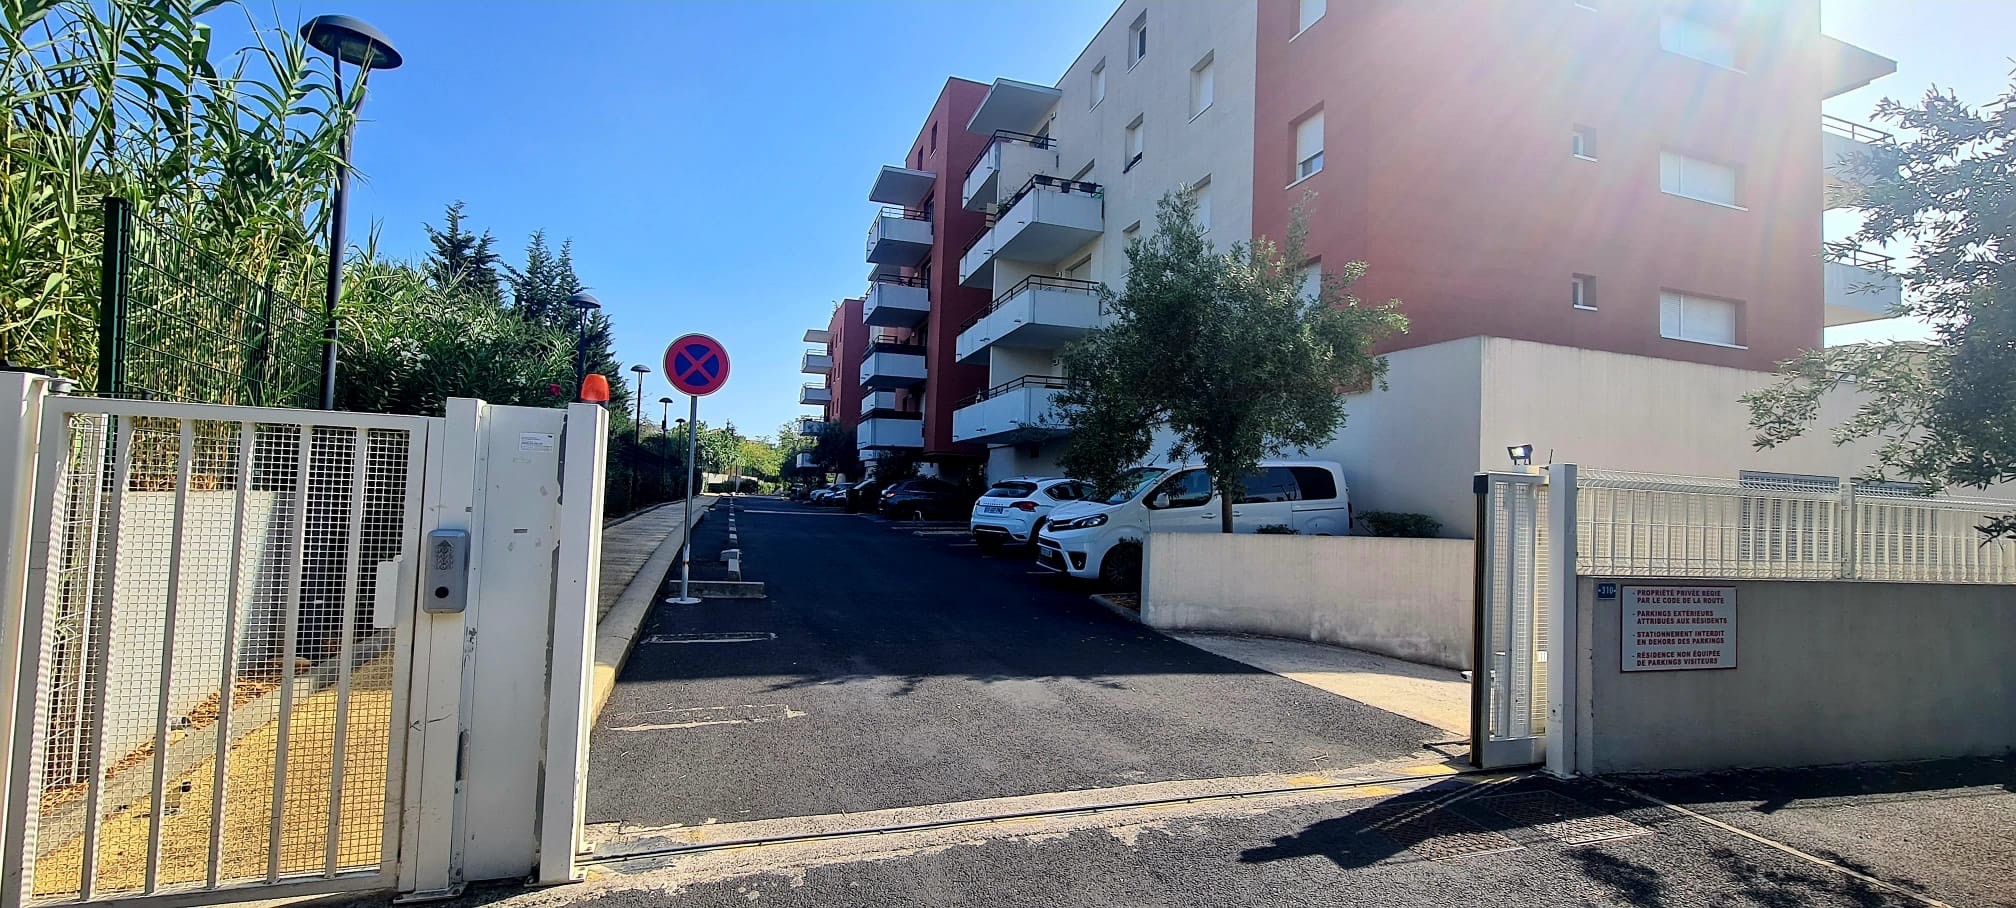 Location Garage / Parking à Montpellier 0 pièce